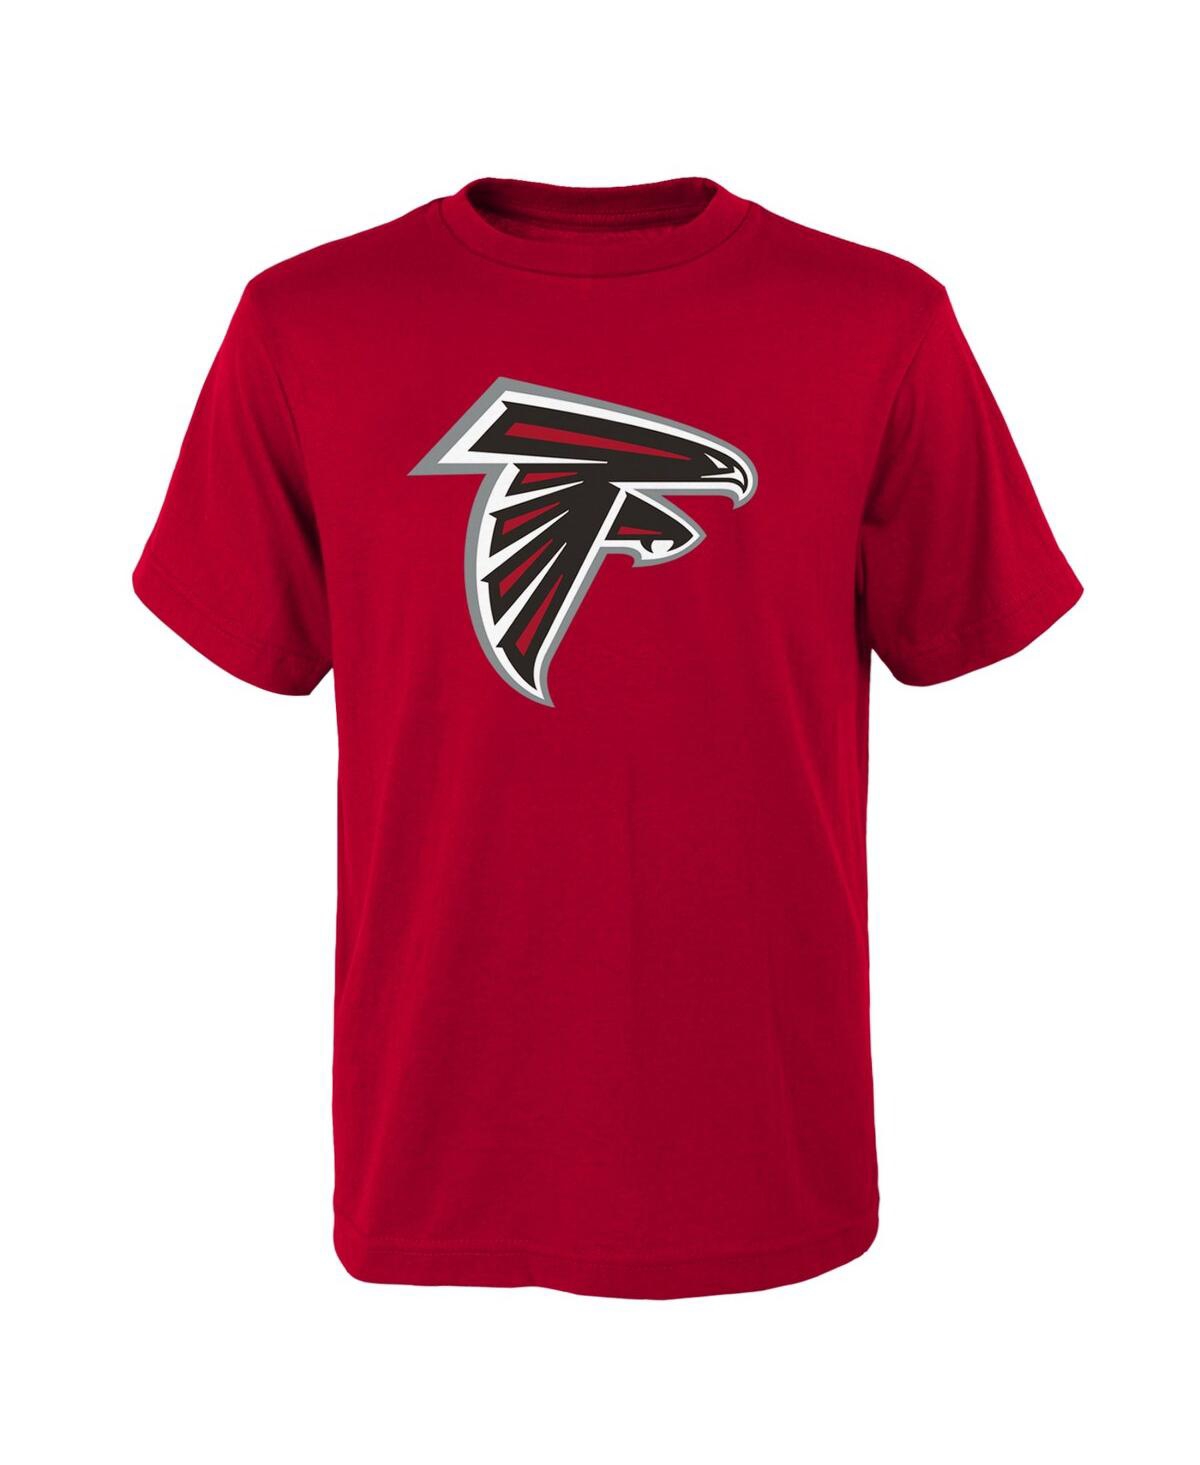 Outerstuff Kids' Big Boys Red Atlanta Falcons Primary Logo T-shirt